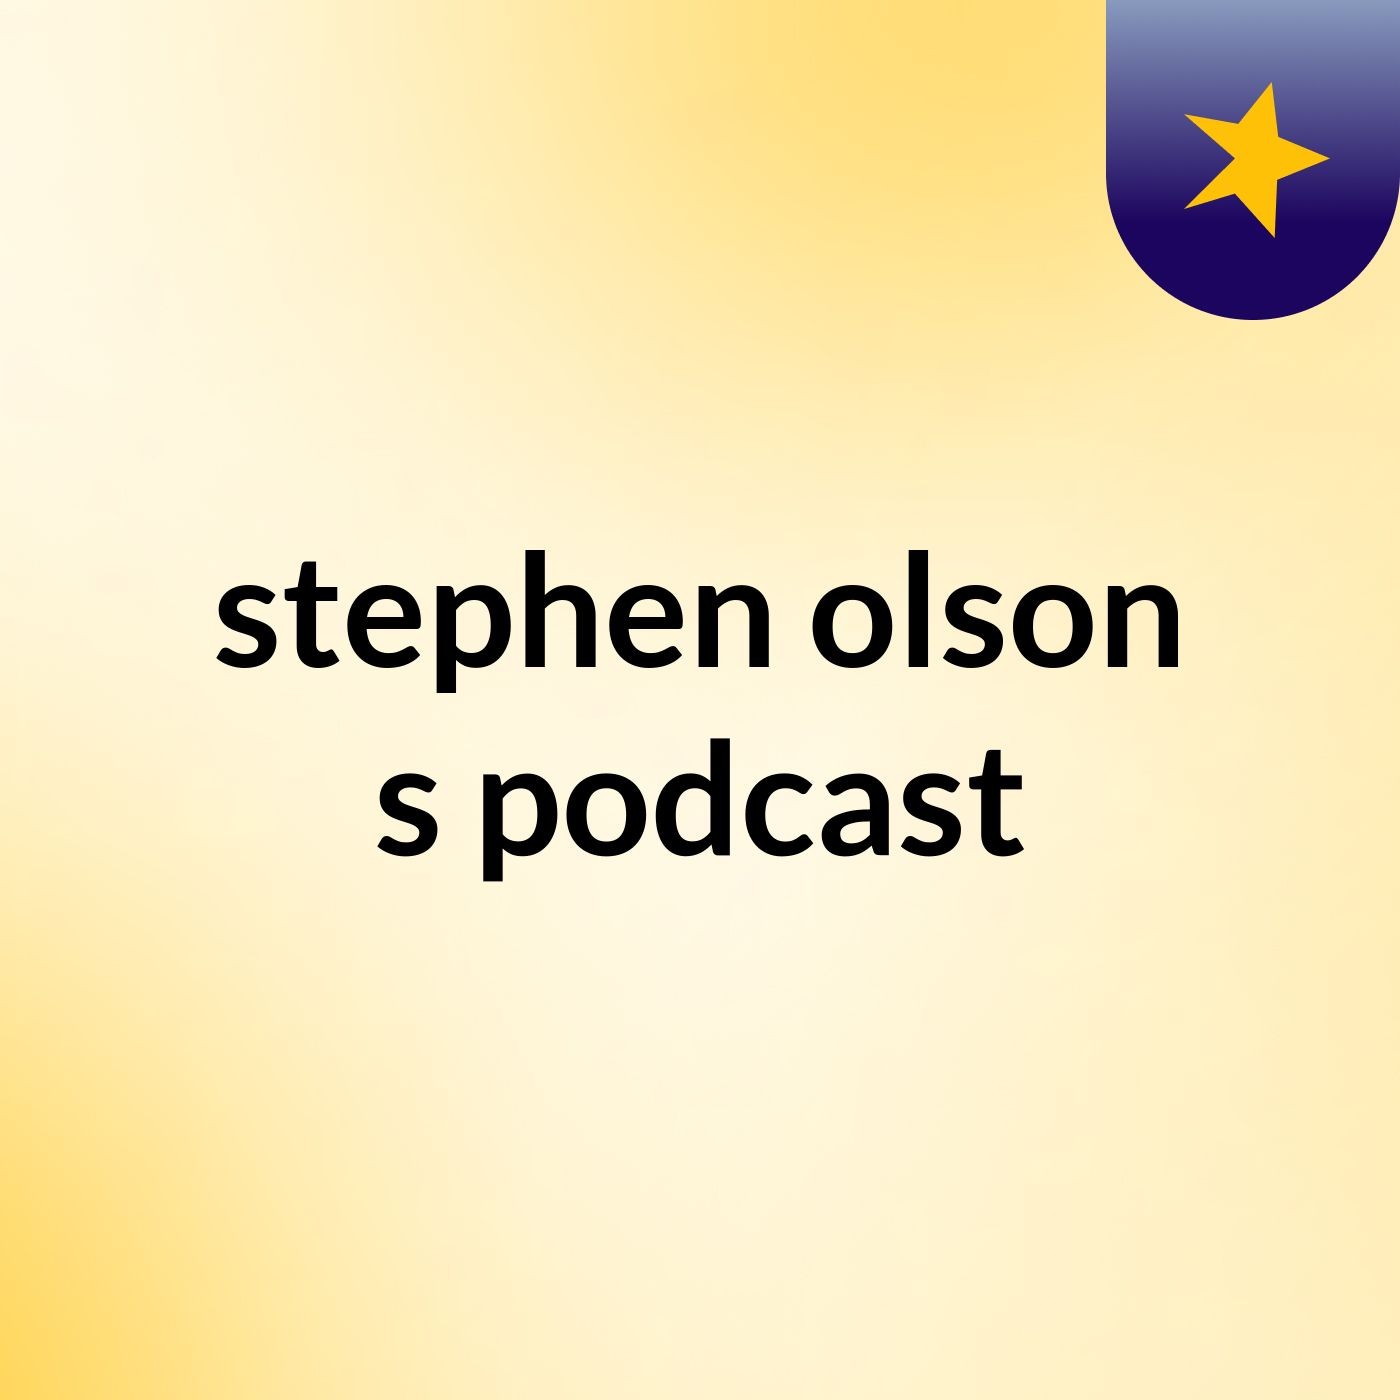 Episode 6 - stephen olson's podcast